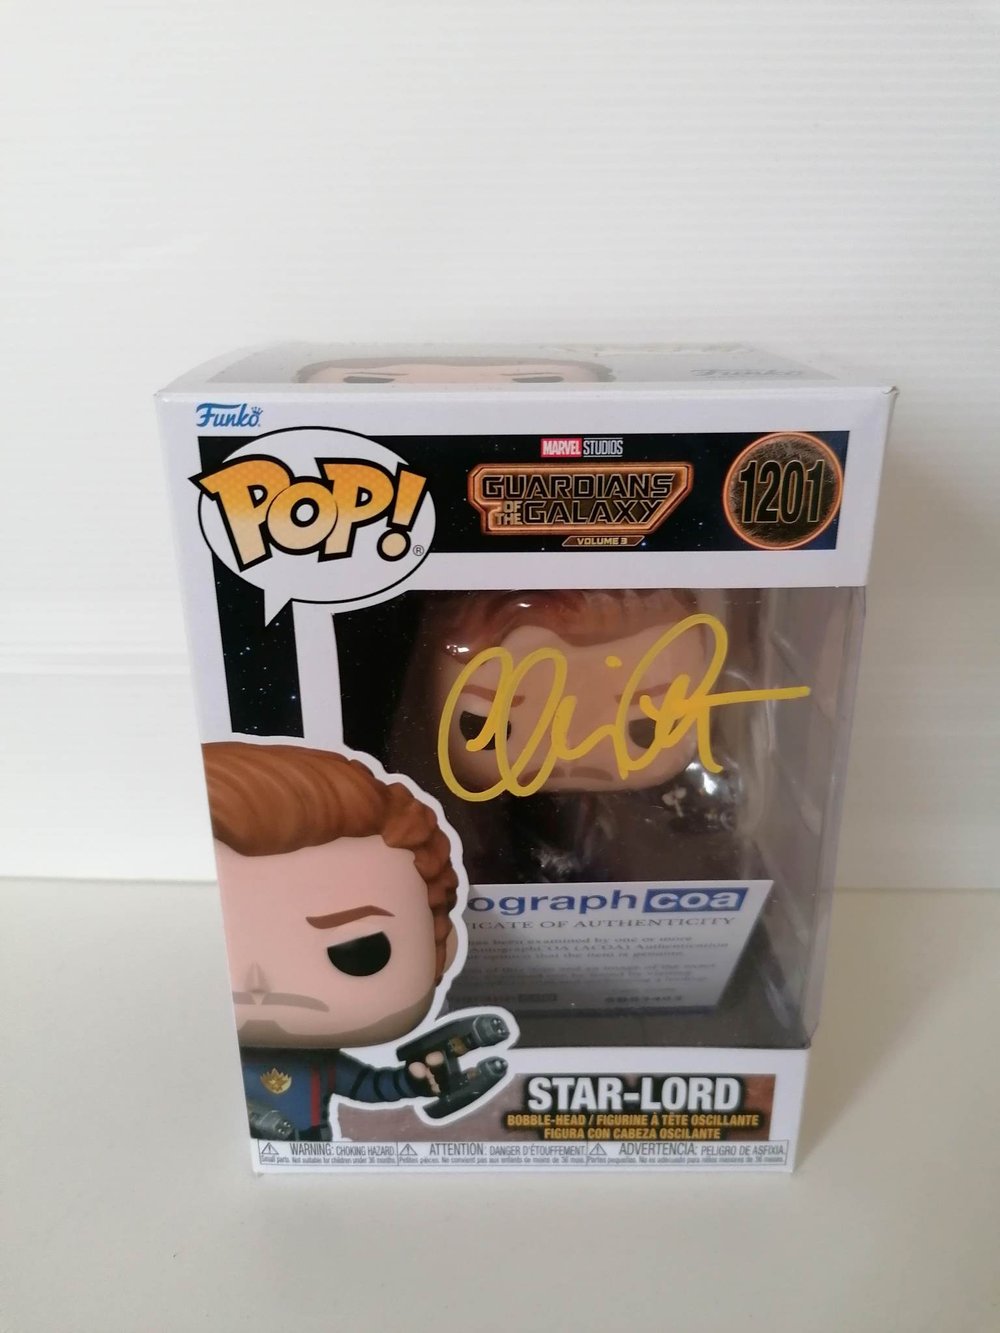 Chris Pratt Star Lord Guardians of the Galaxy 3 Signed Funko Pop